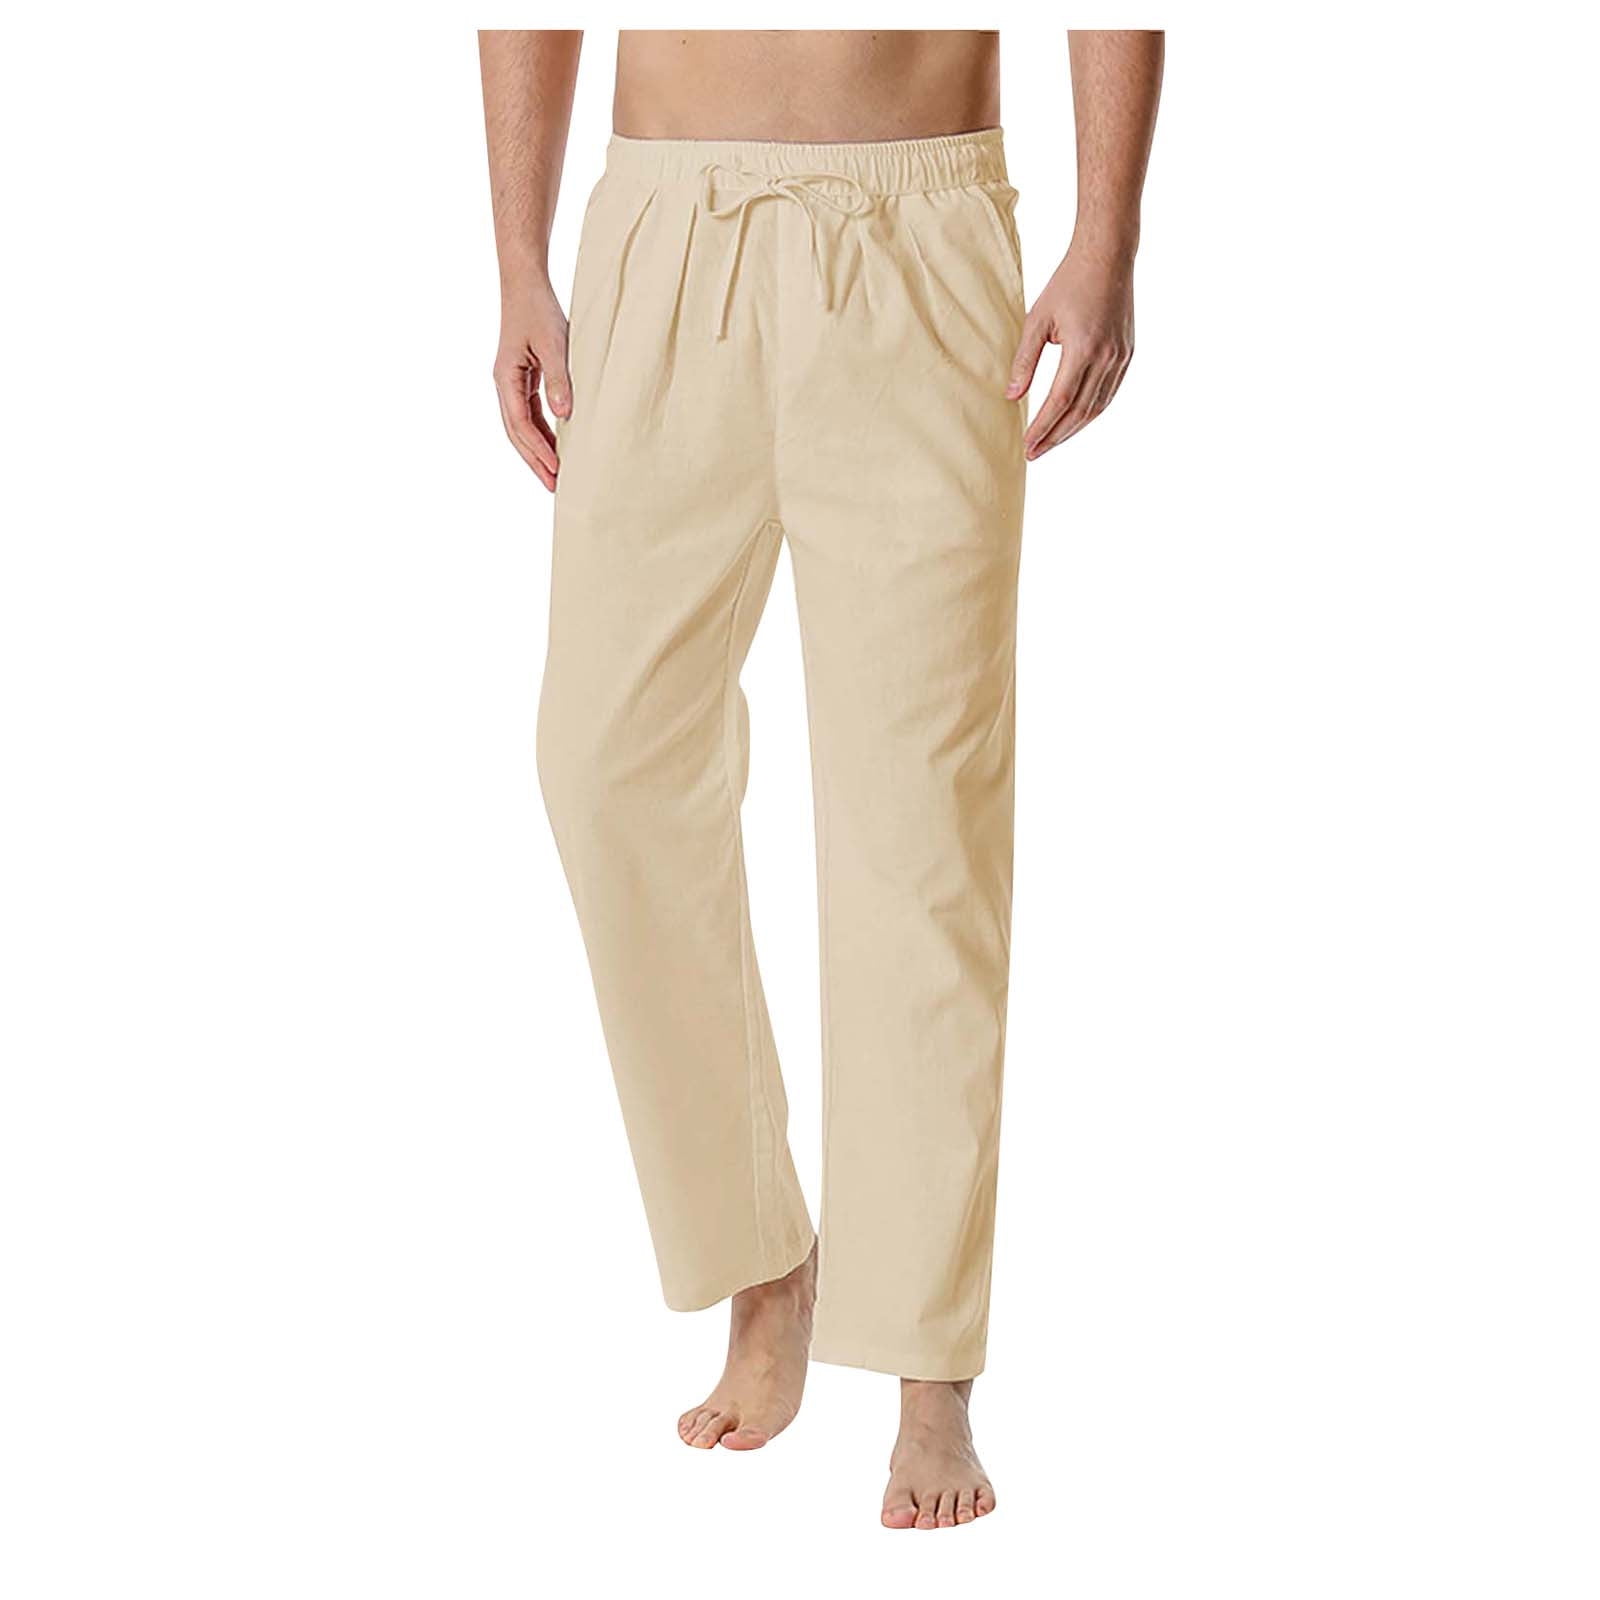 KaLI_store Cargo Pants for Men Mens Cargo Pants Casual Hiking Pant ...